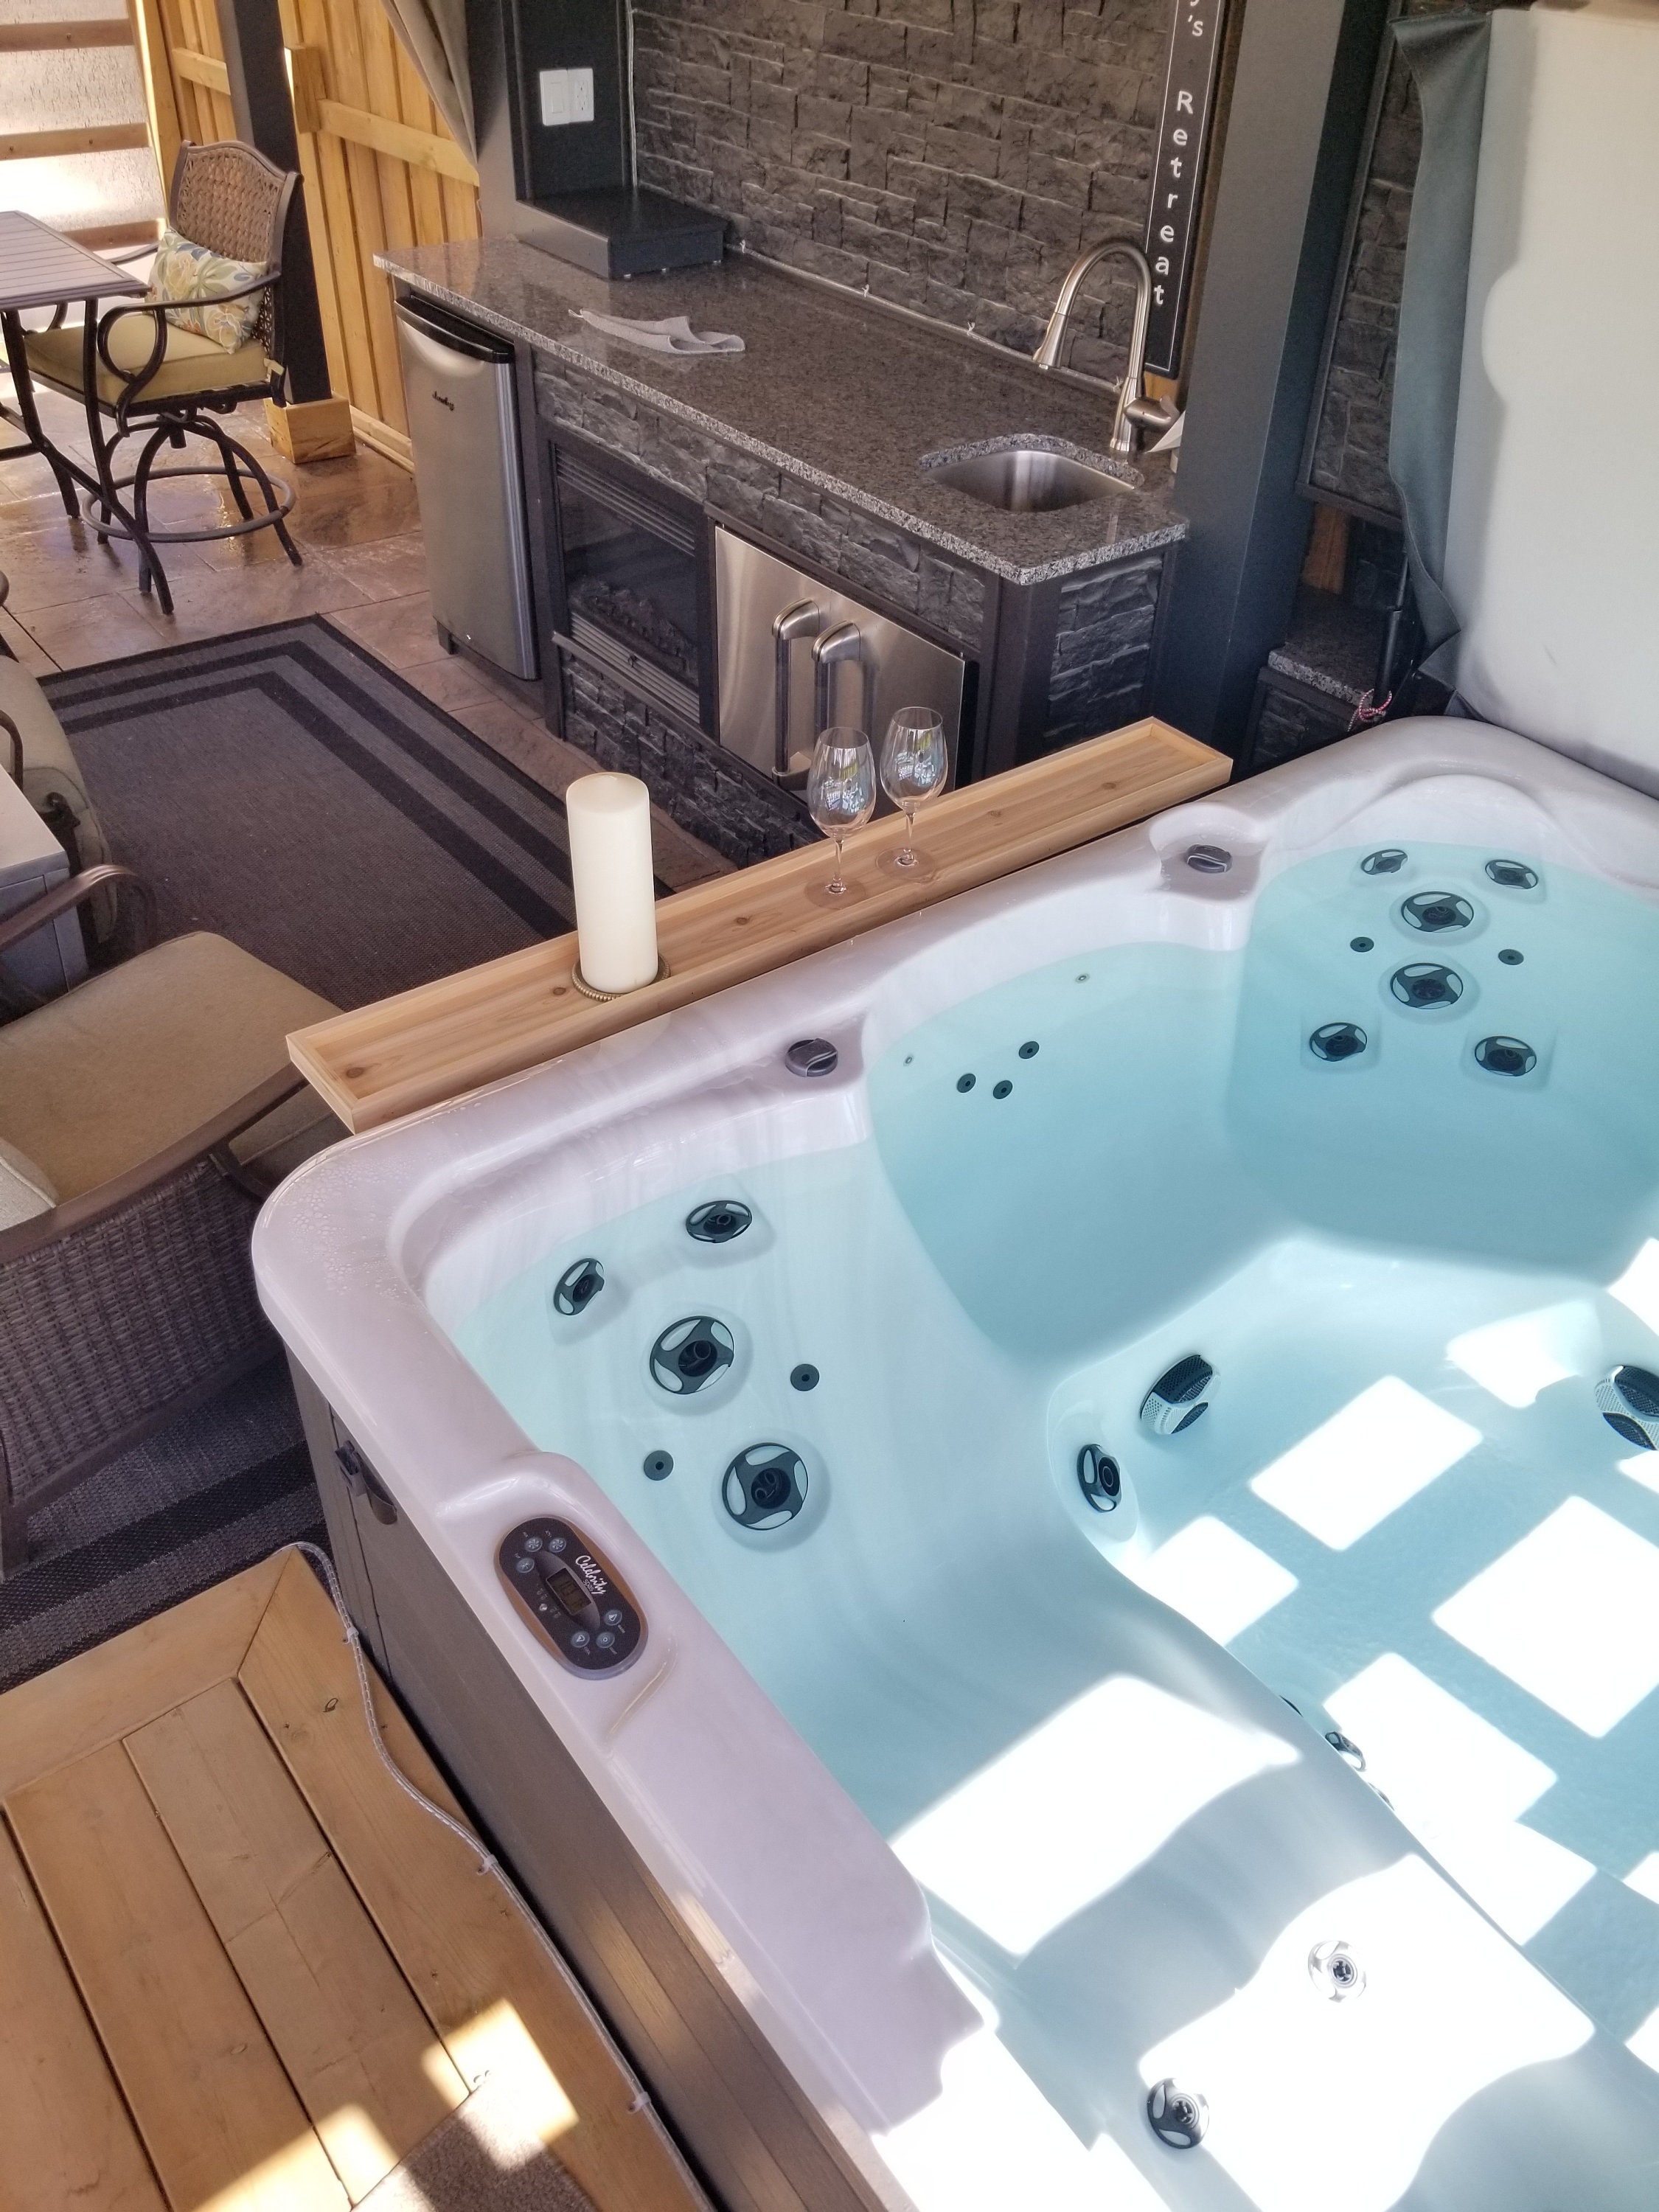  Treerit Hot Tub Table, Adjustable Hot Tub Tray with 2